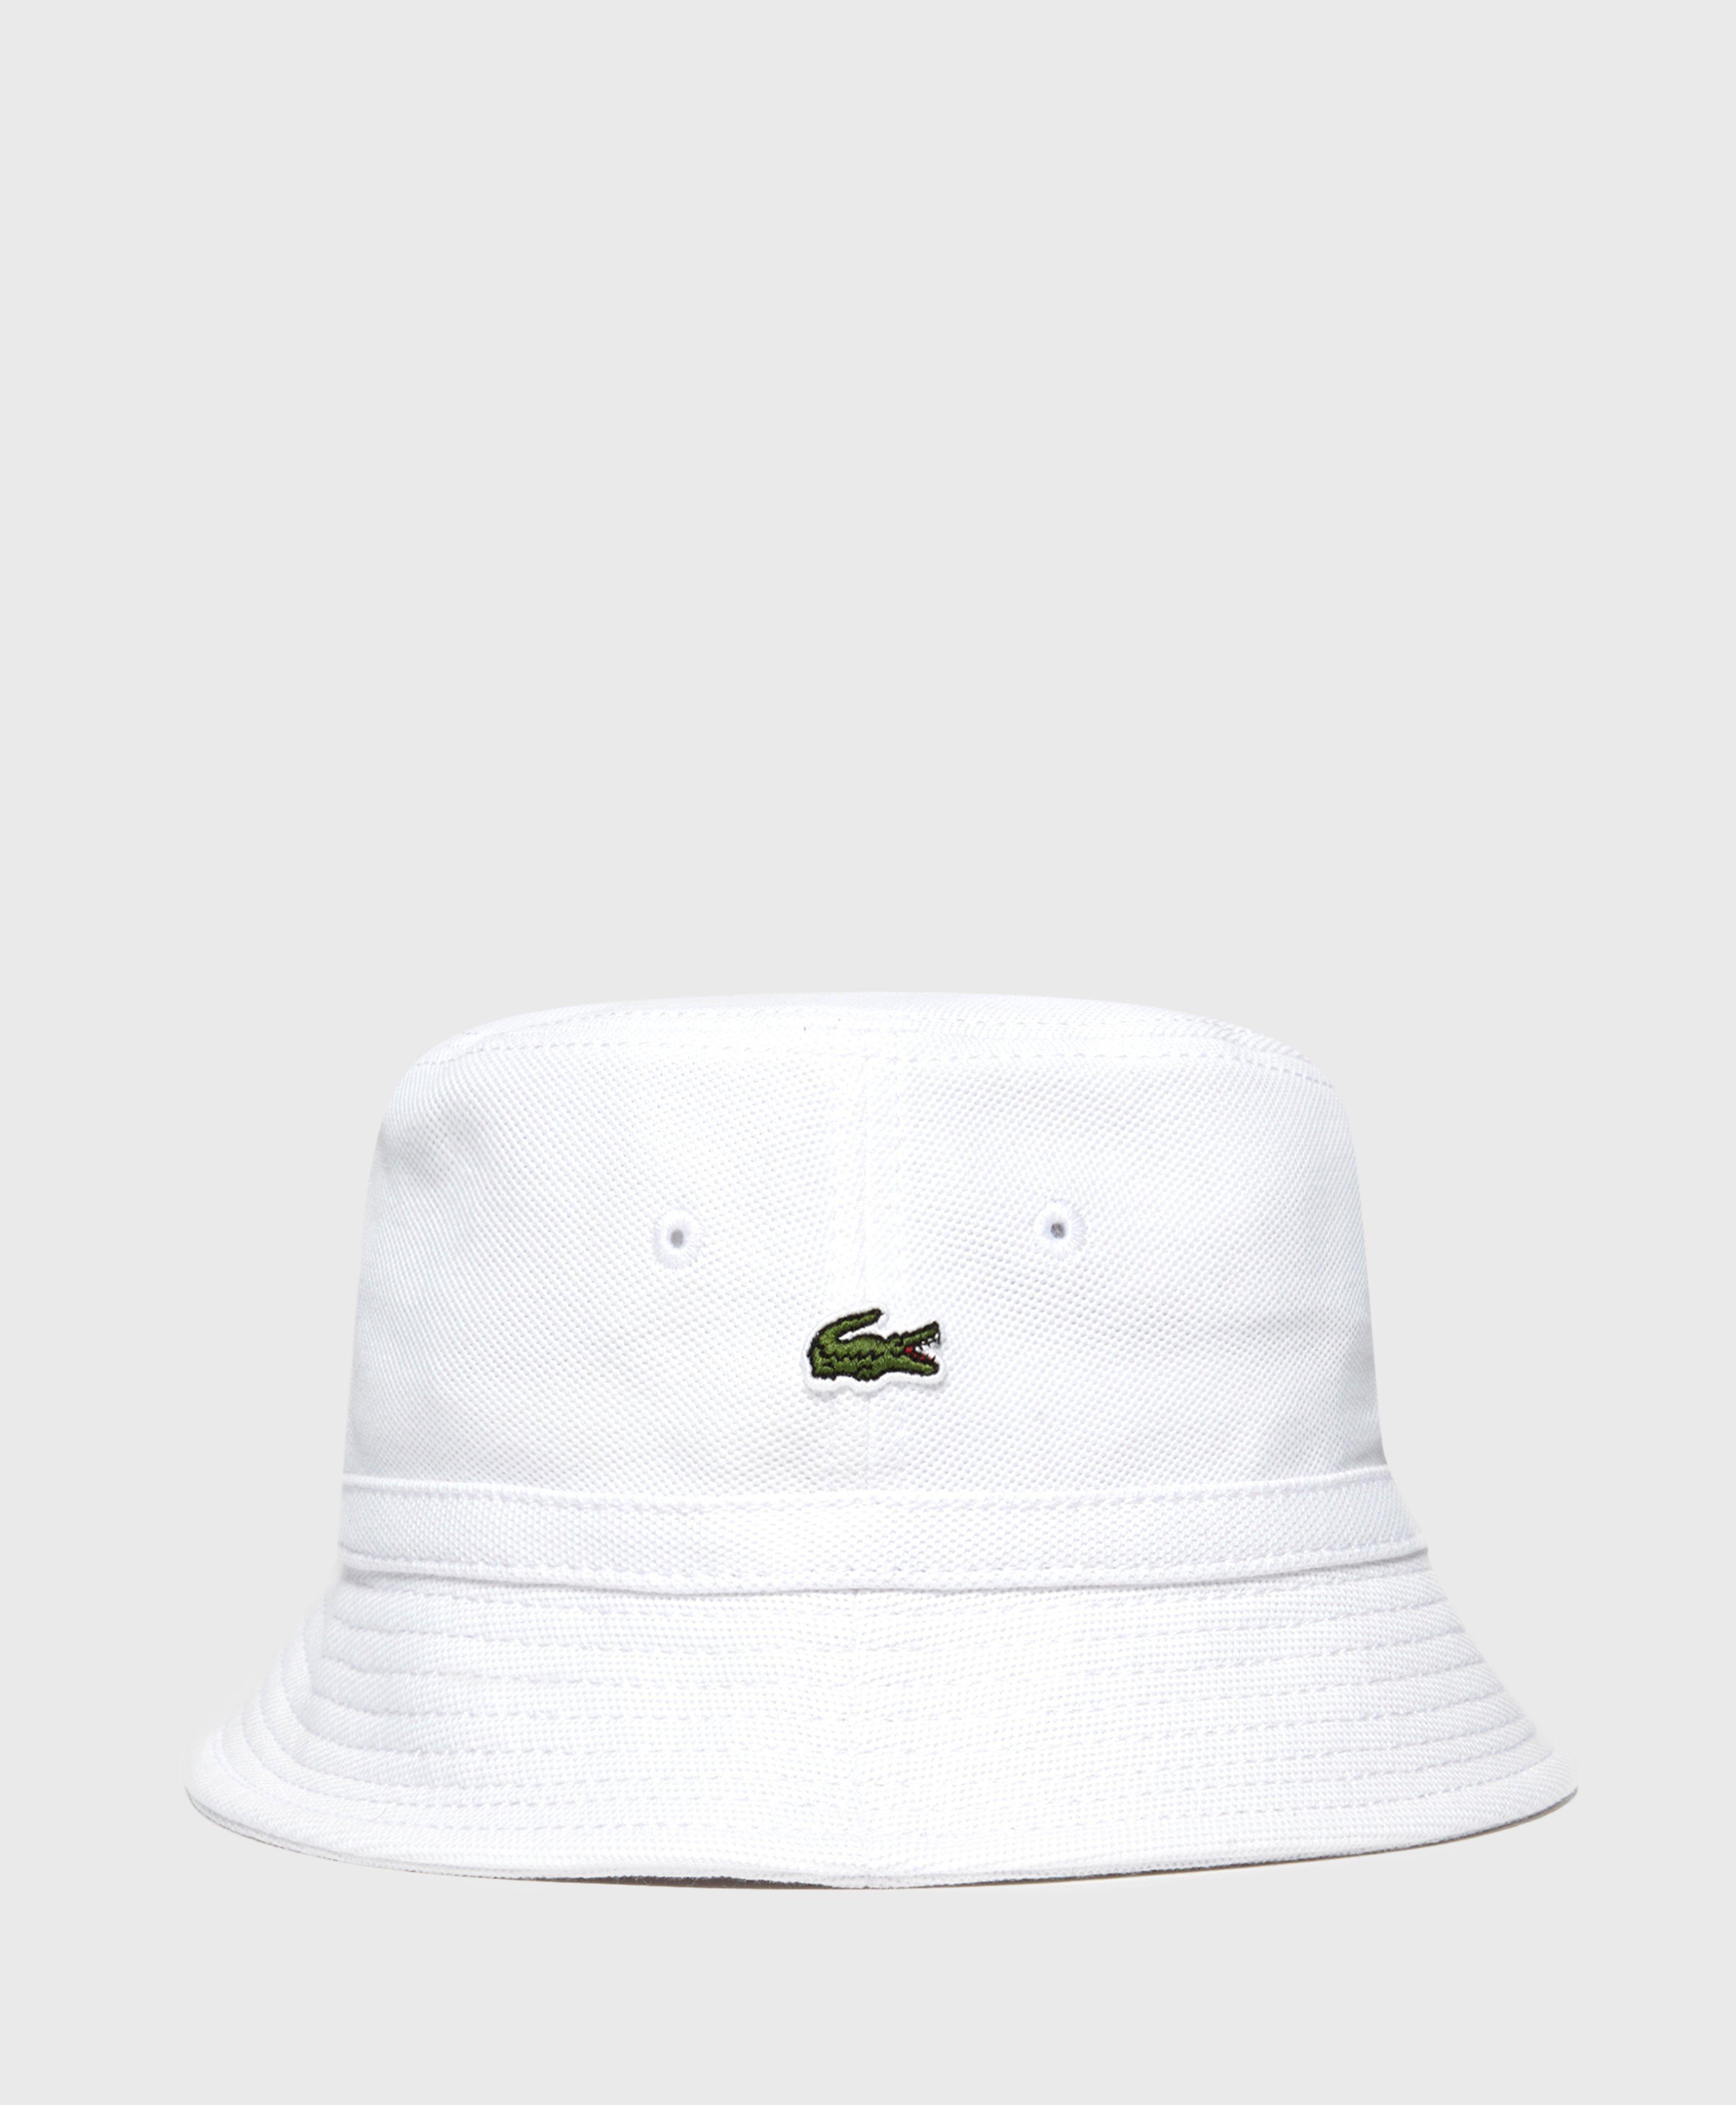 Lacoste Cotton Pique Bucket Hat in White for Men - Lyst